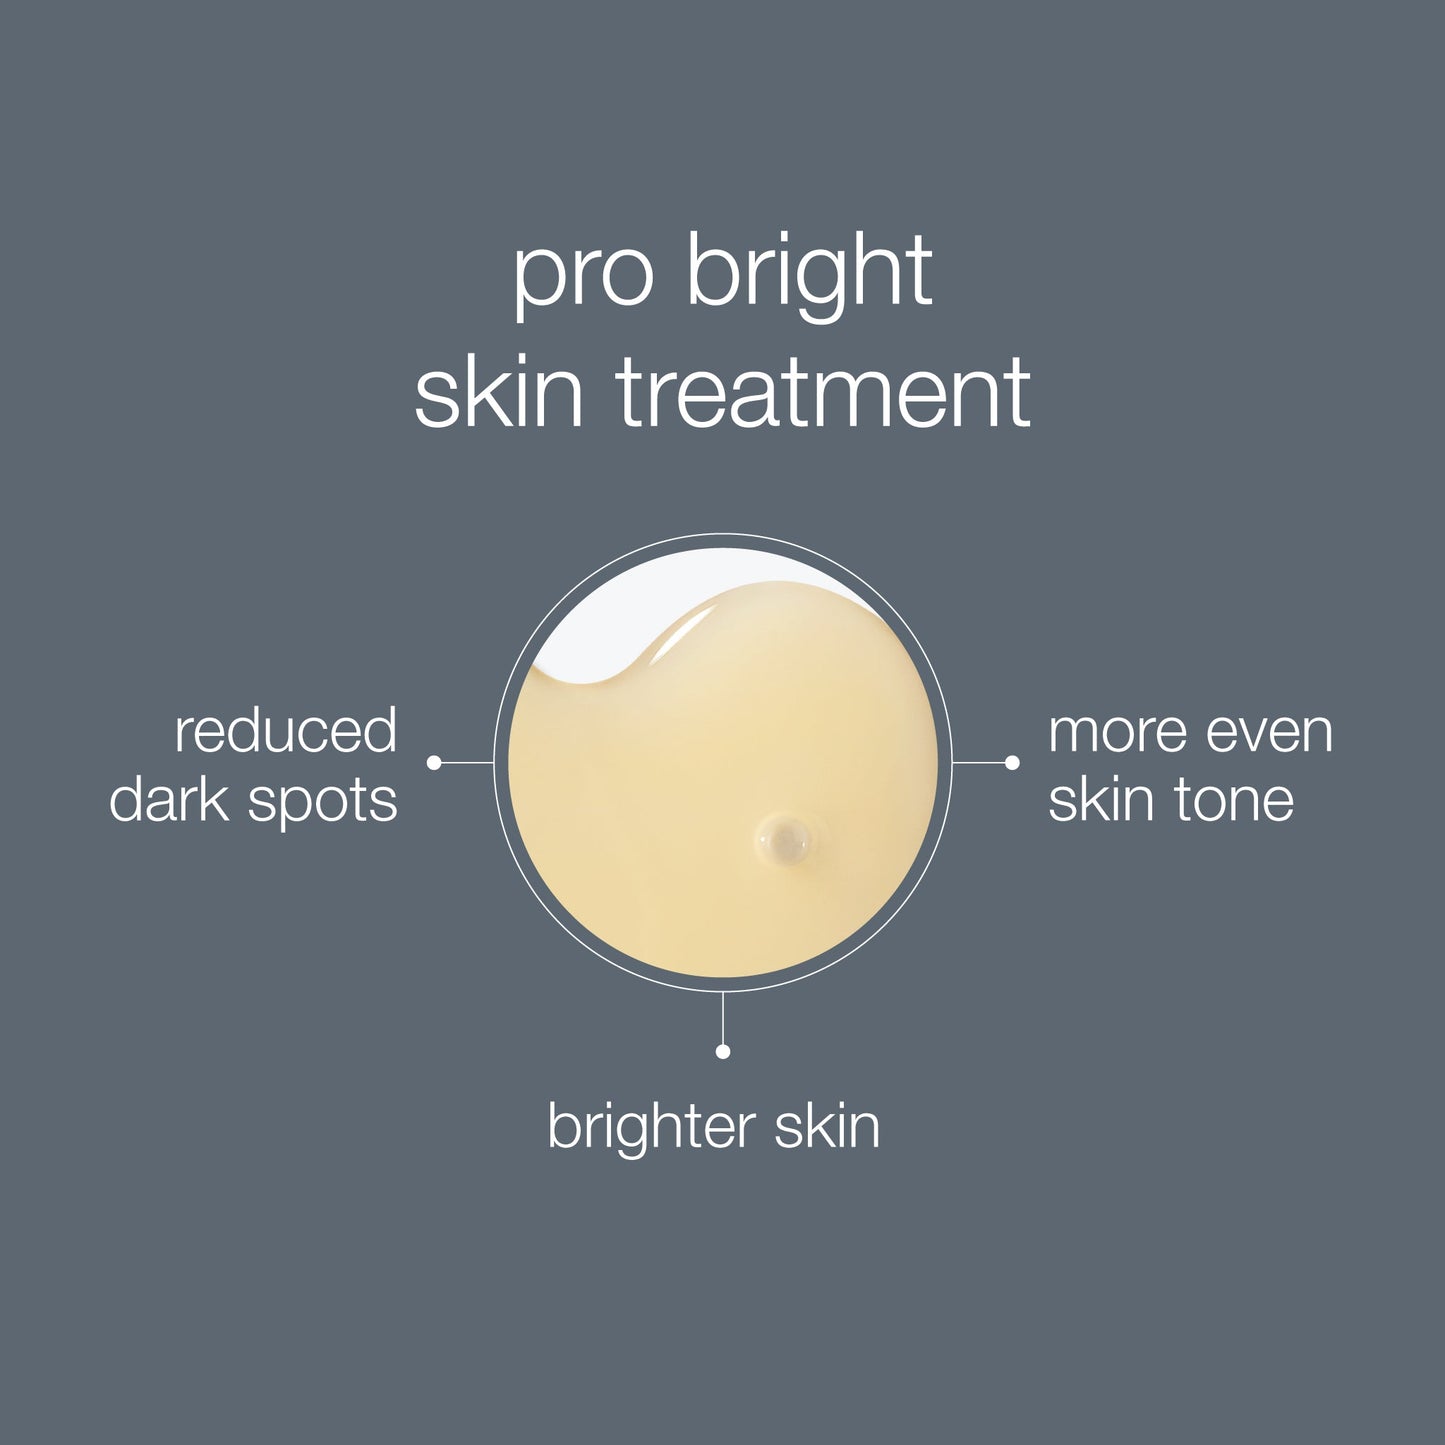 pro bright skin treatment benefits